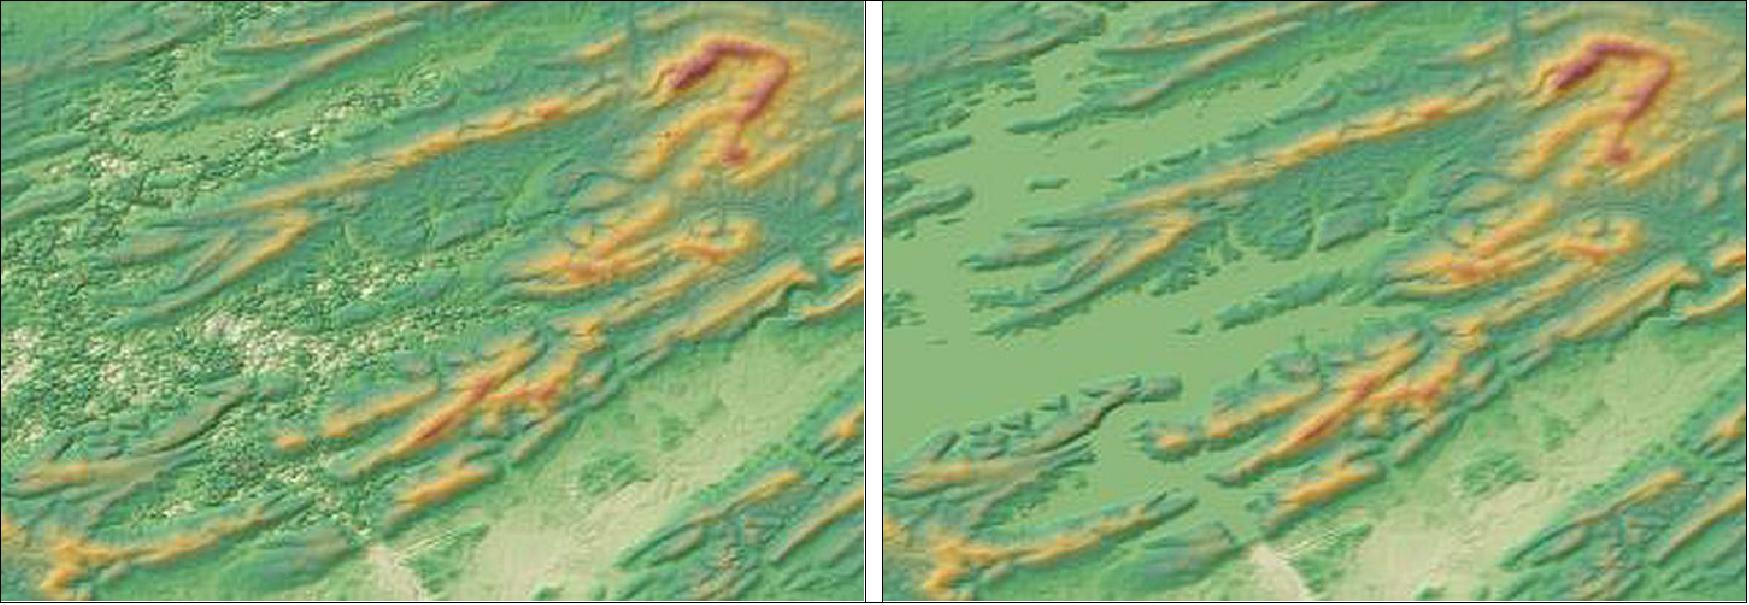 Figure 59: Left: WorldDEMcore (unedited); Right: WorldDEM (edited); Site: Lake Ouachita, Hot Springs, Arkansas, USA (image credit: Airbus DS)